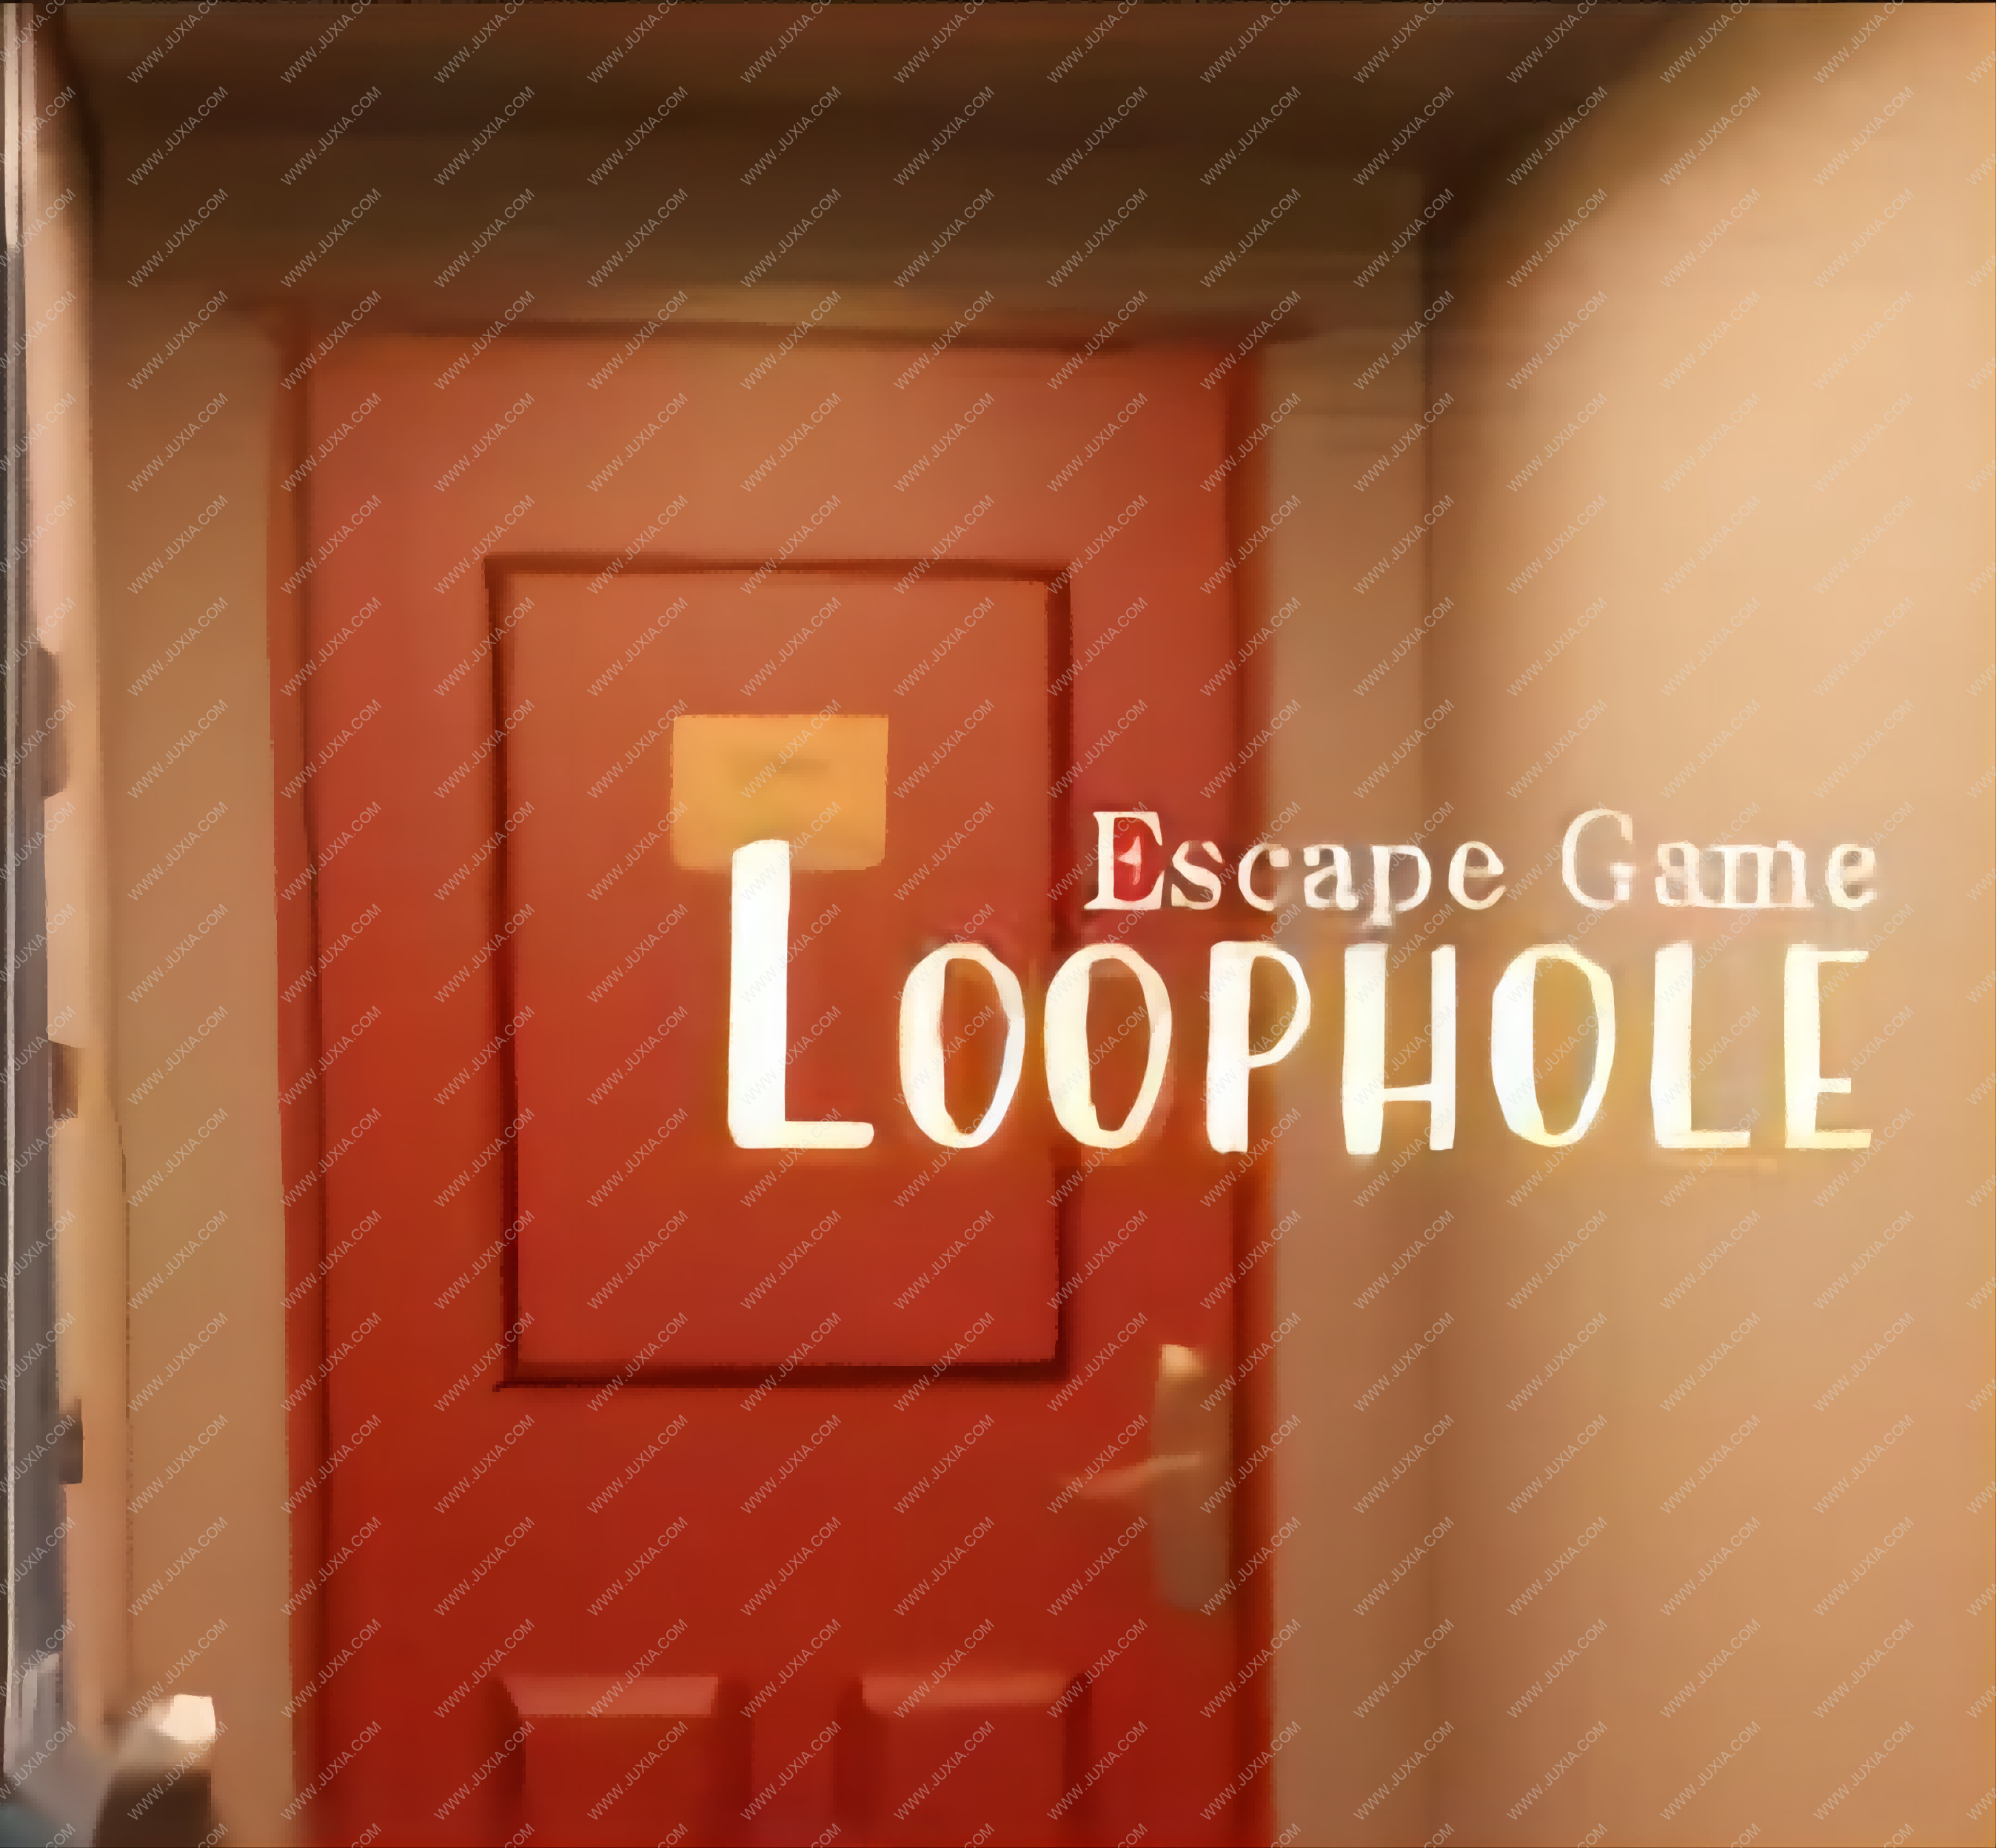 escapegameloophole攻略合集 逃脱游戏loophole图文详解-迷失攻略组